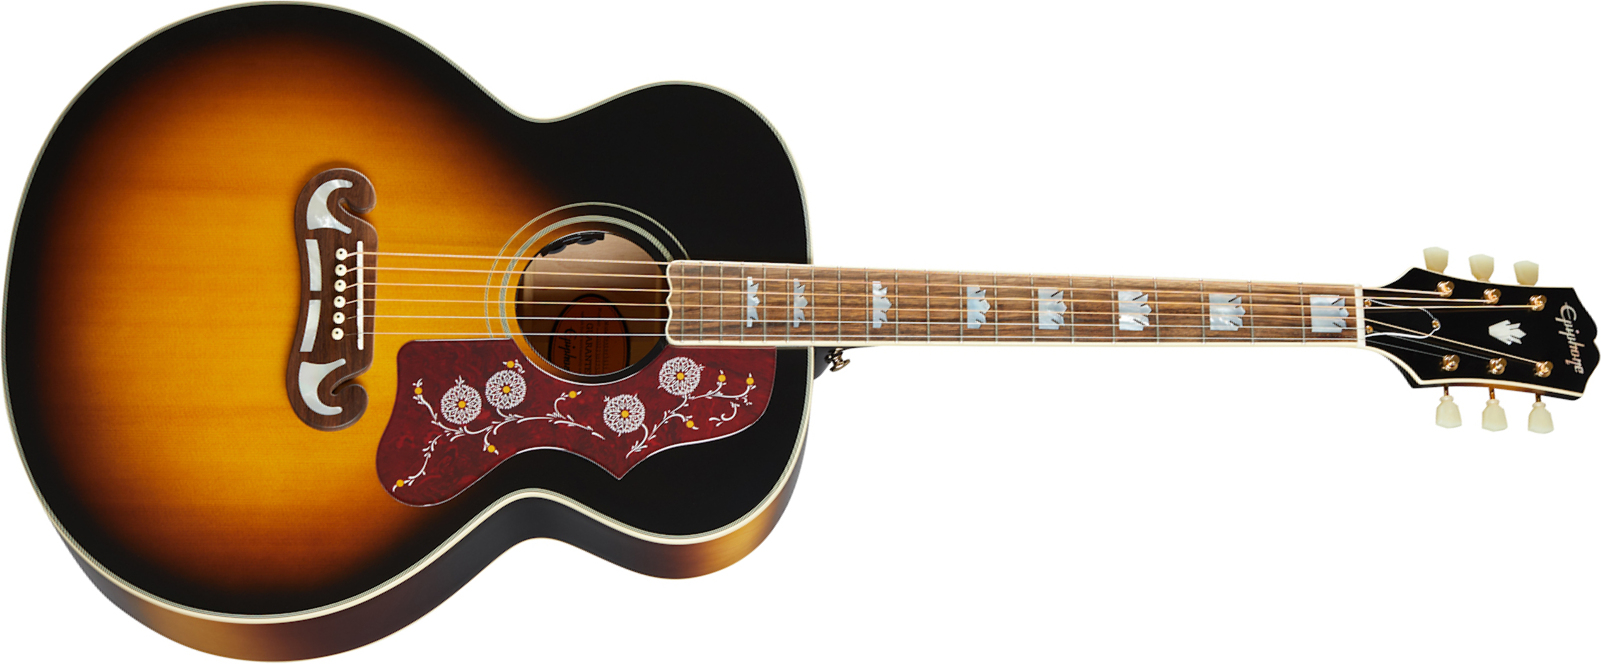 Epiphone J-200 Inspired By Gibson Jumbo Epicea Erable Lau - Aged Vintage Sunburst - Guitare Electro Acoustique - Main picture